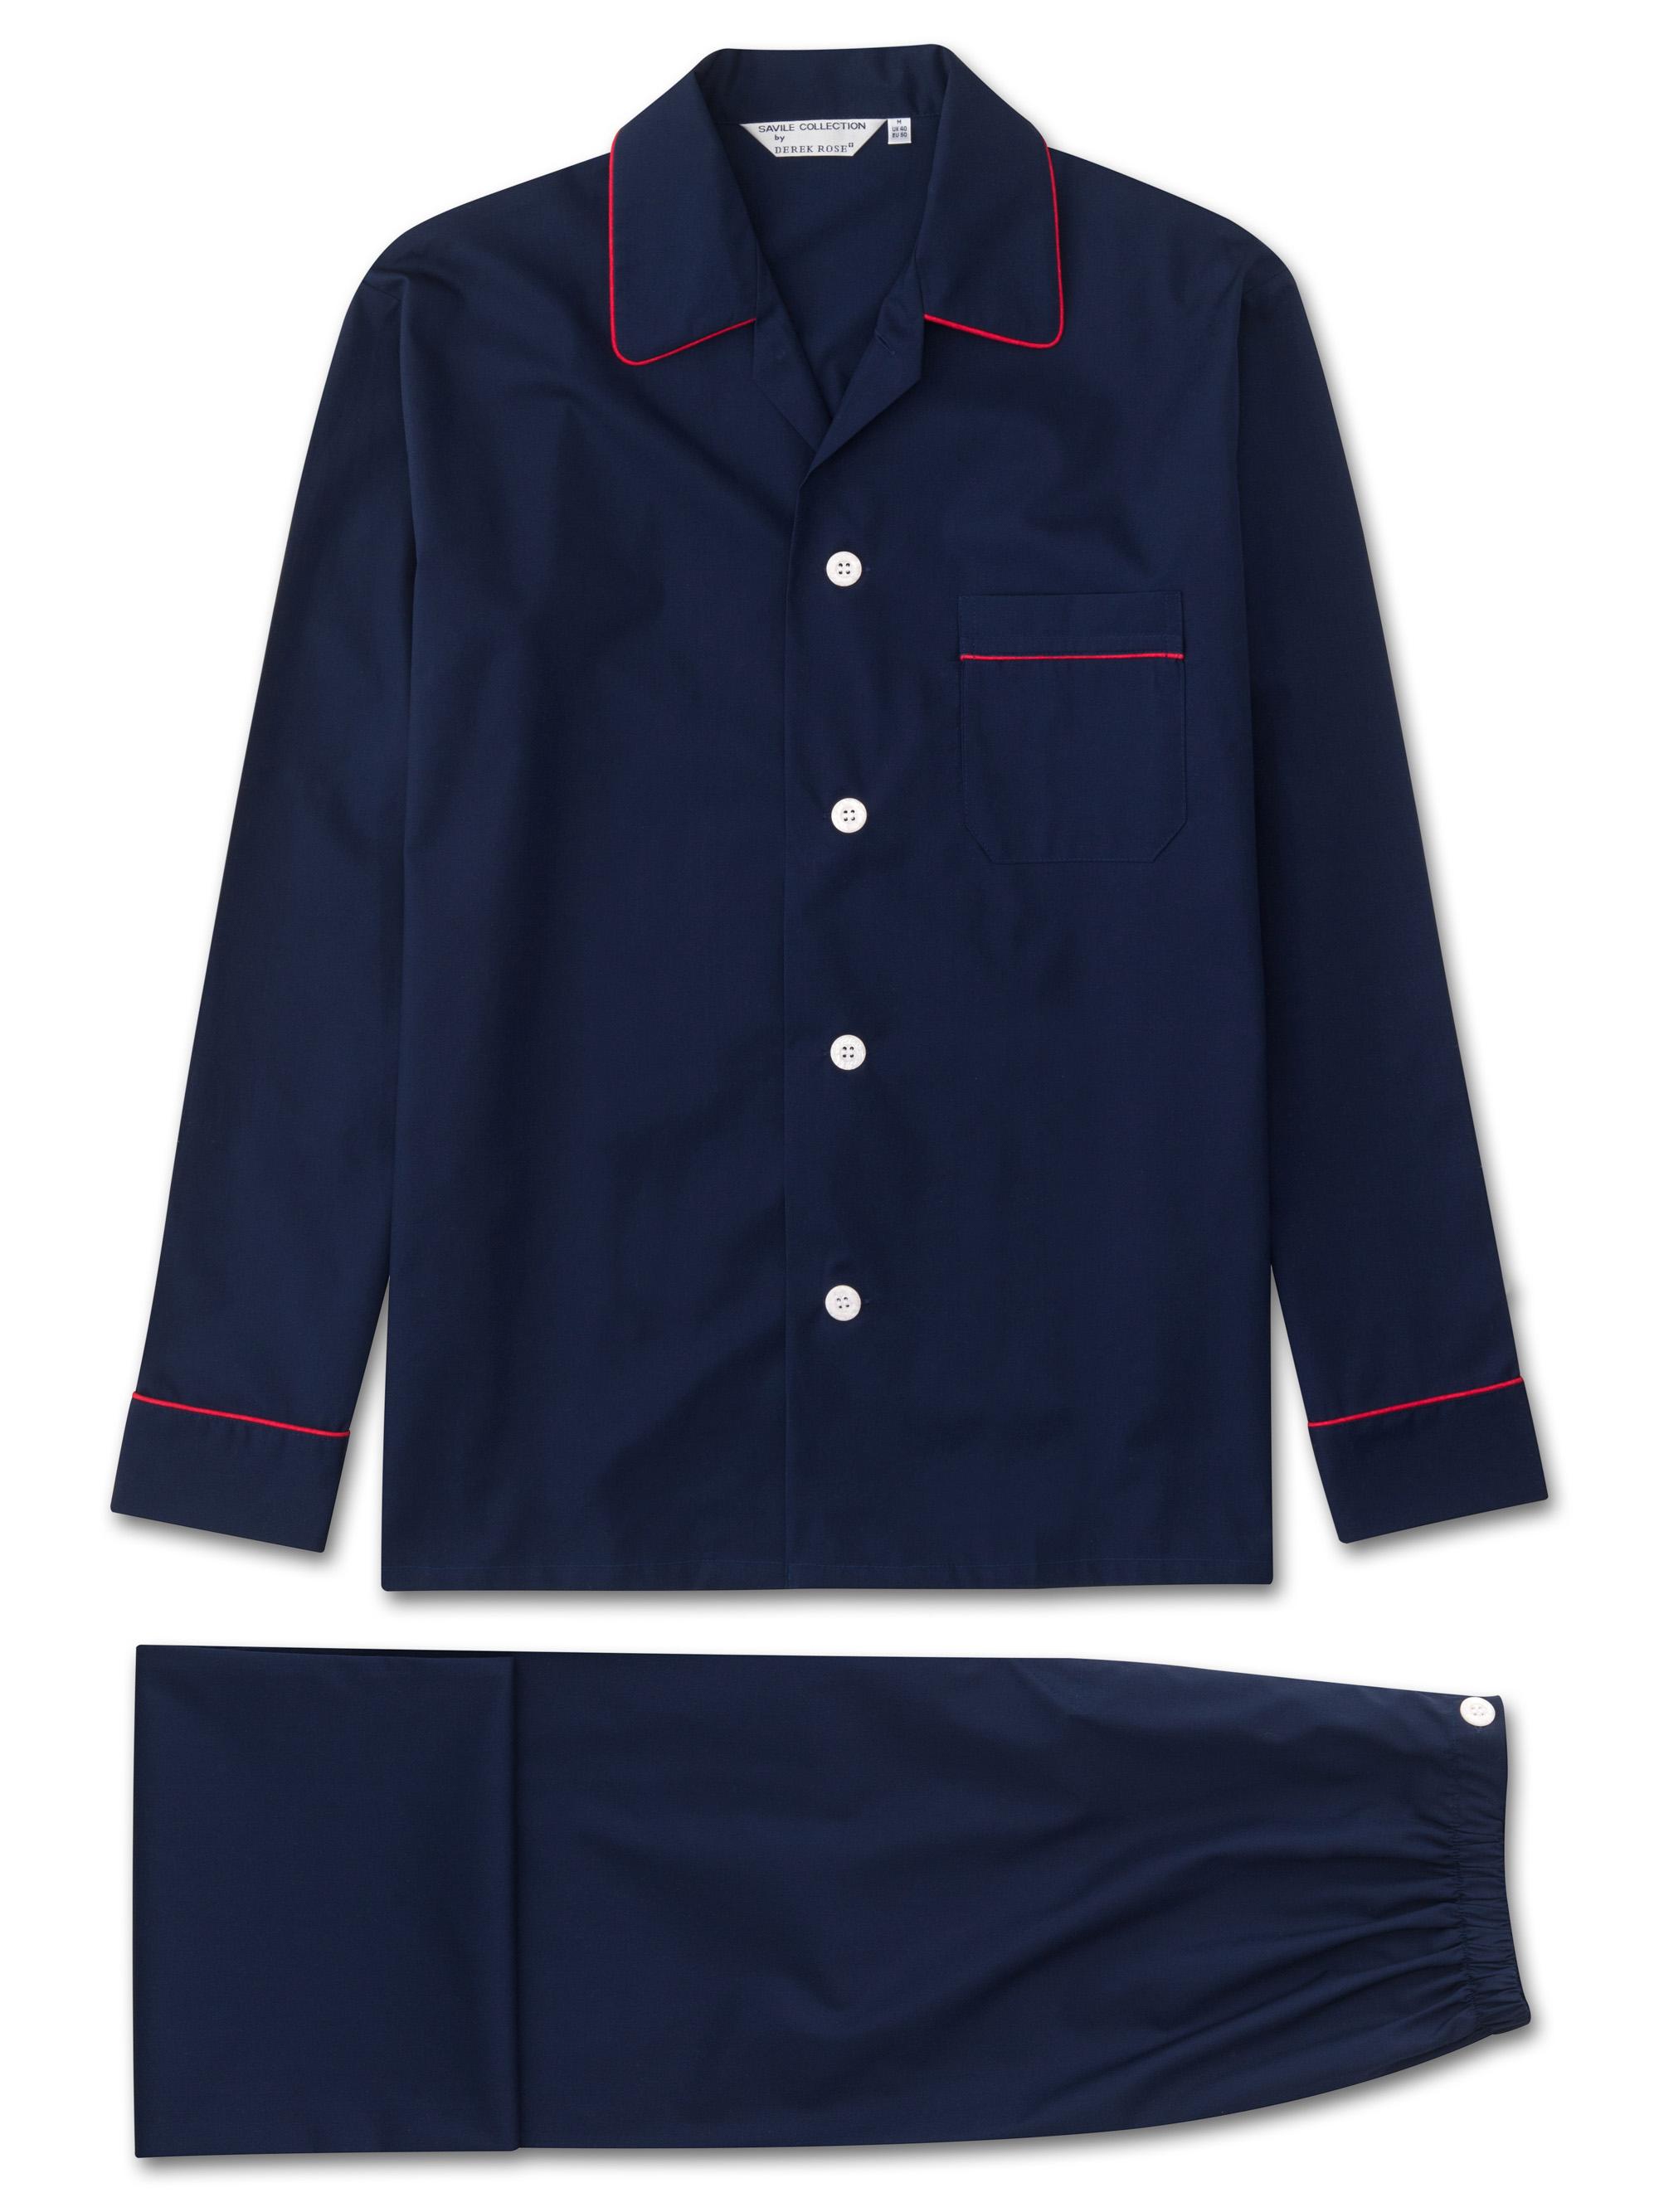 Derek Rose Men's Royal Satin Stripe Classic Fit Pyjama Set Navy